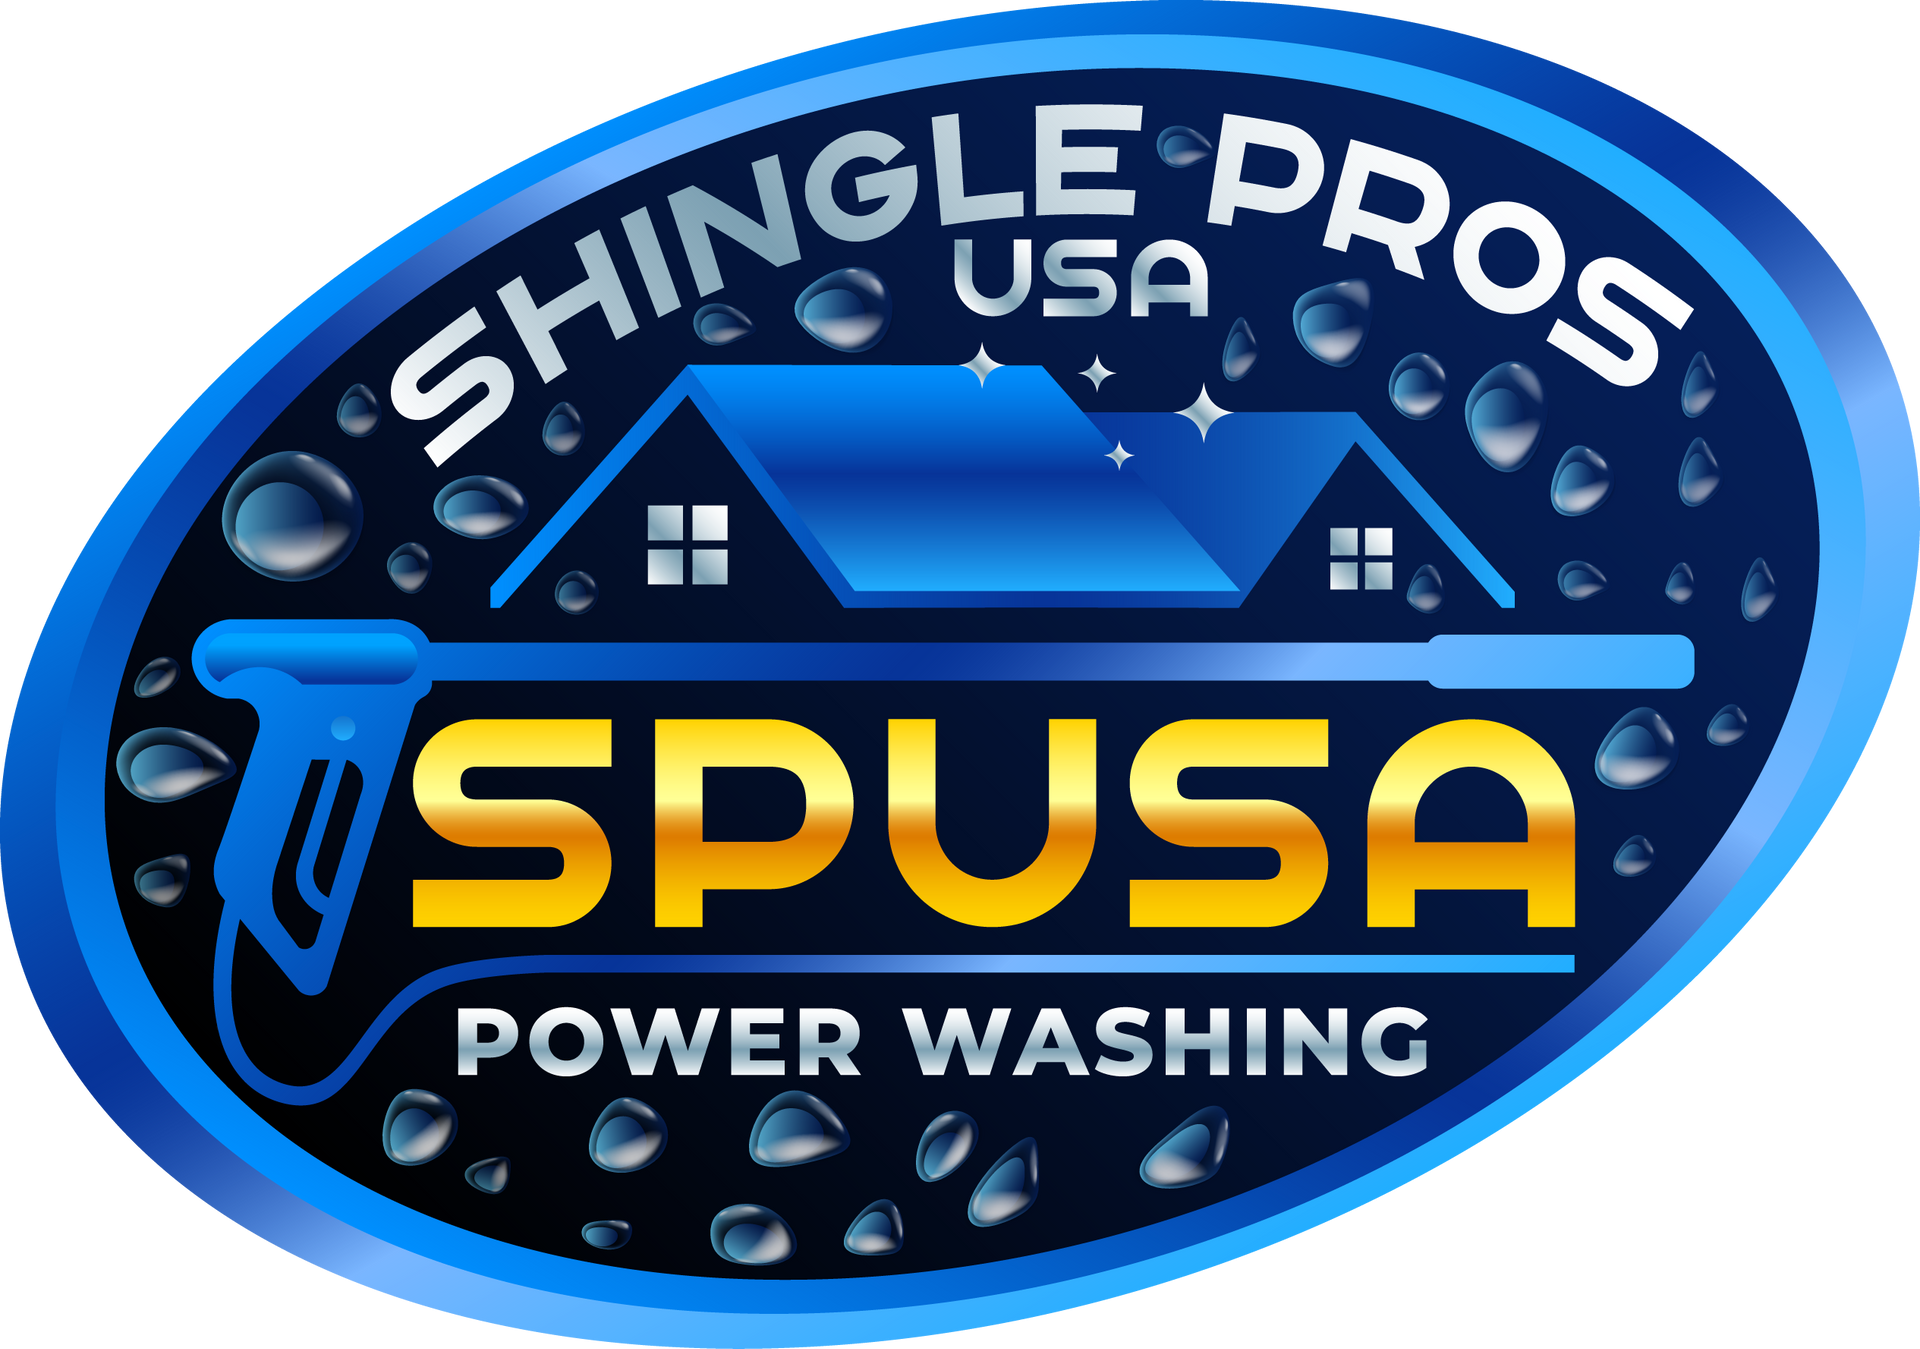 Logo for Shingle Pros USA Pressure washing service